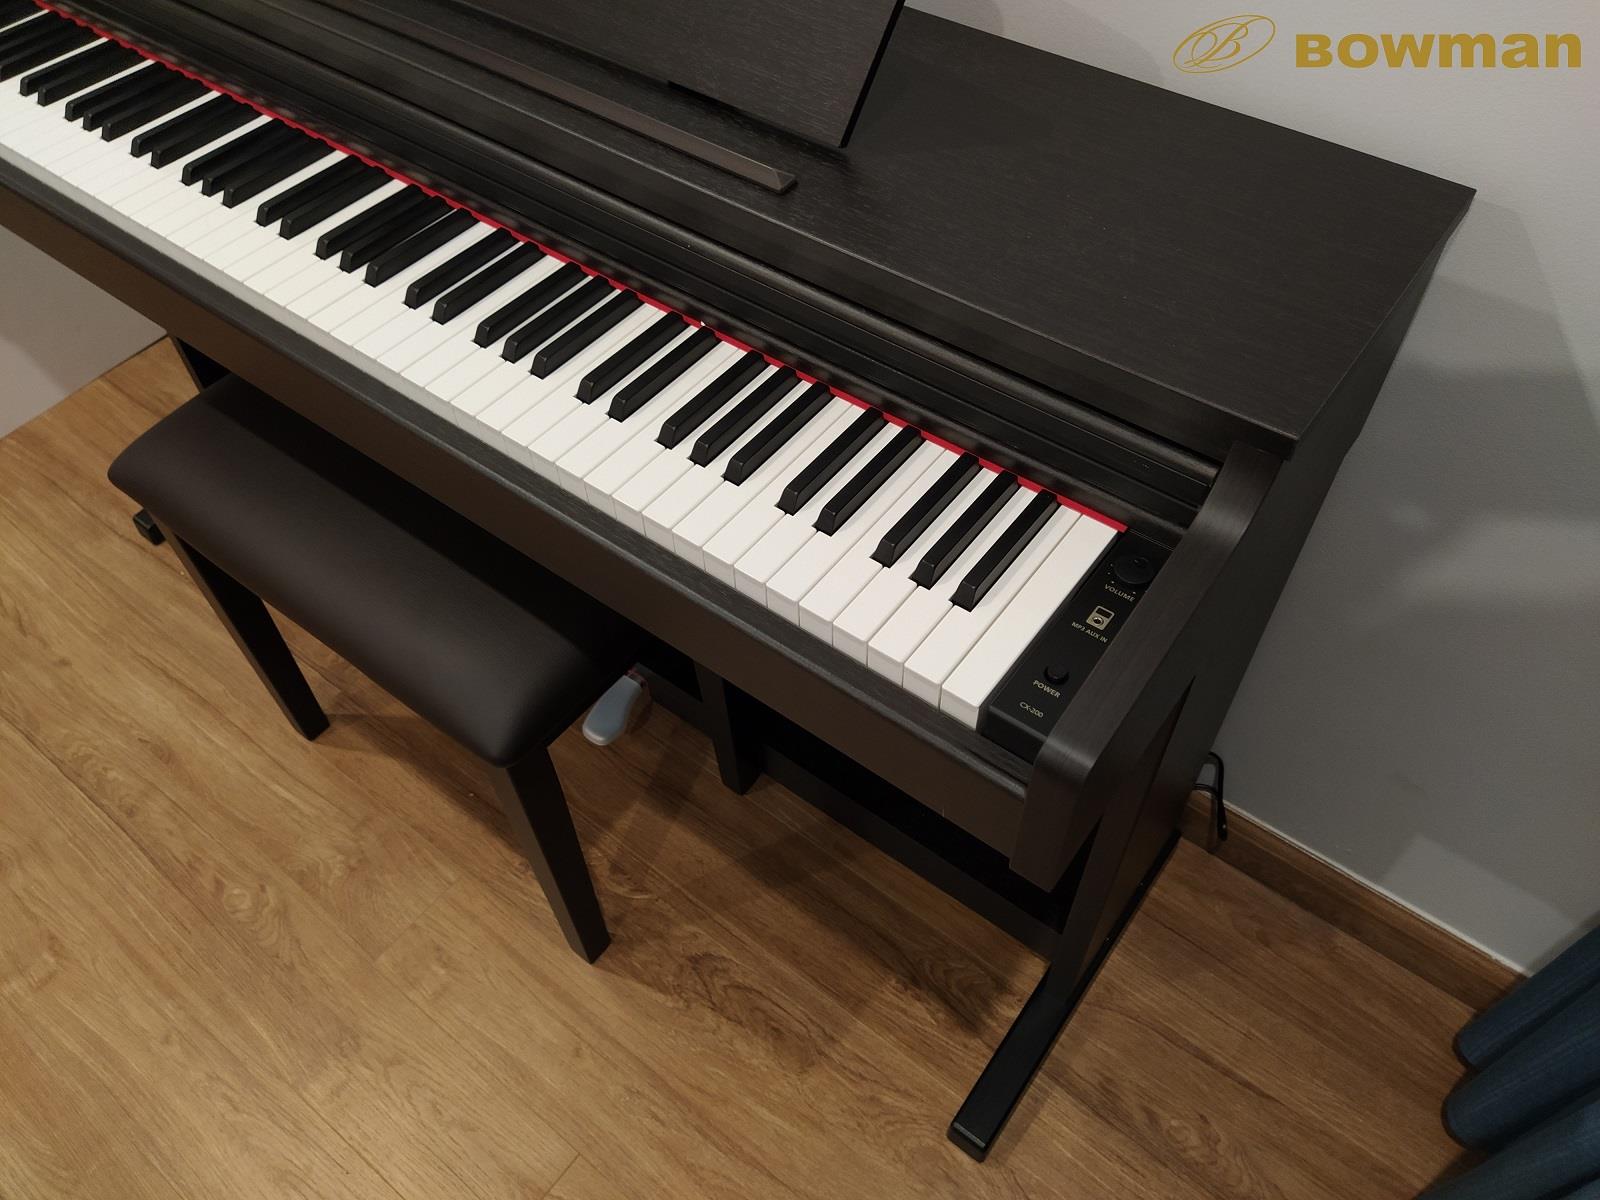 Bowman Piano has a sophisticated, modern design - English - BowmanPIANO.com.vn